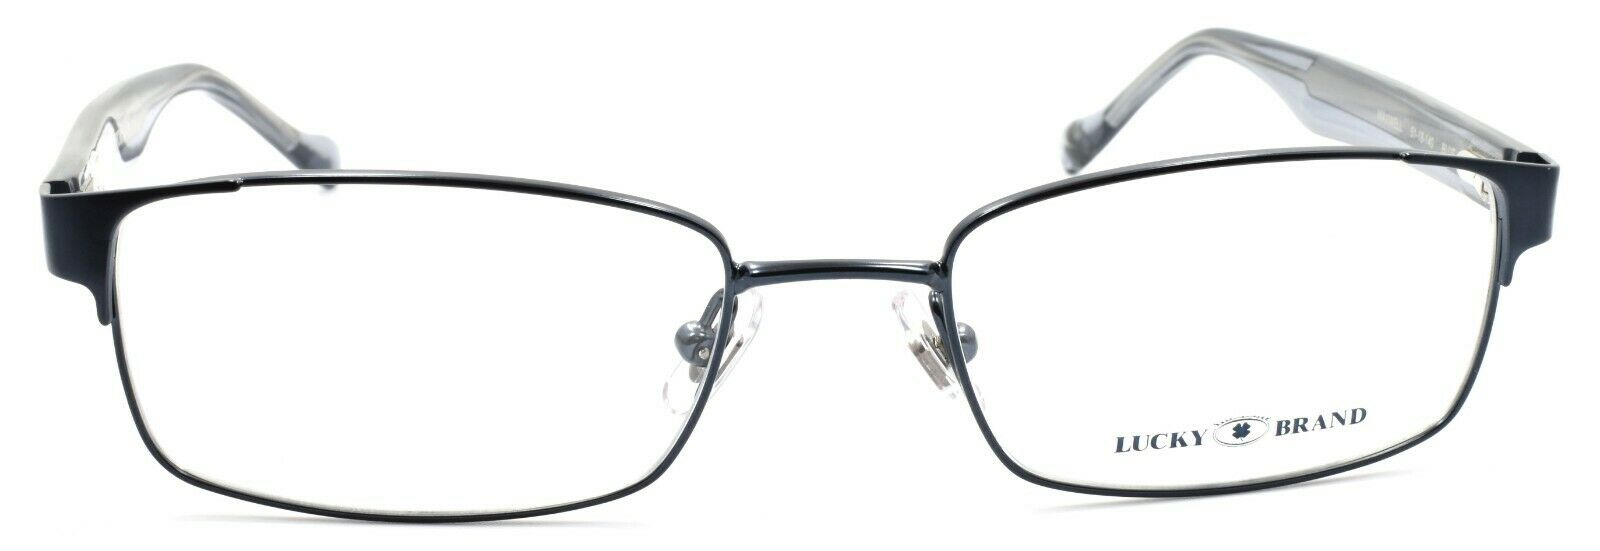 2-LUCKY BRAND Maxwell Men's Eyeglasses Frames 51-18-140 Blue + CASE-751286137873-IKSpecs